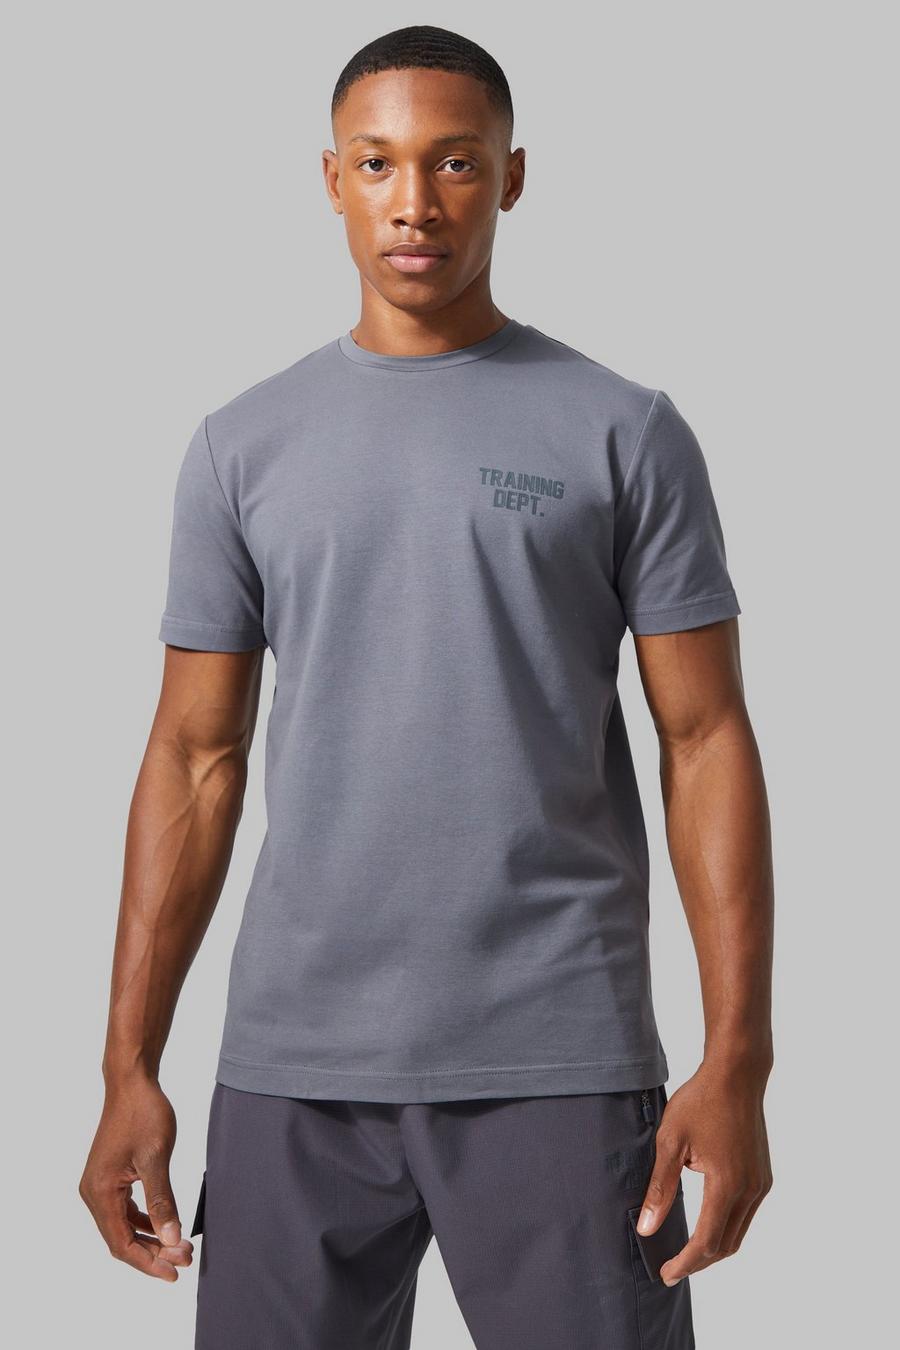 Charcoal gris Active Training Dept Performance Slim T-shirt